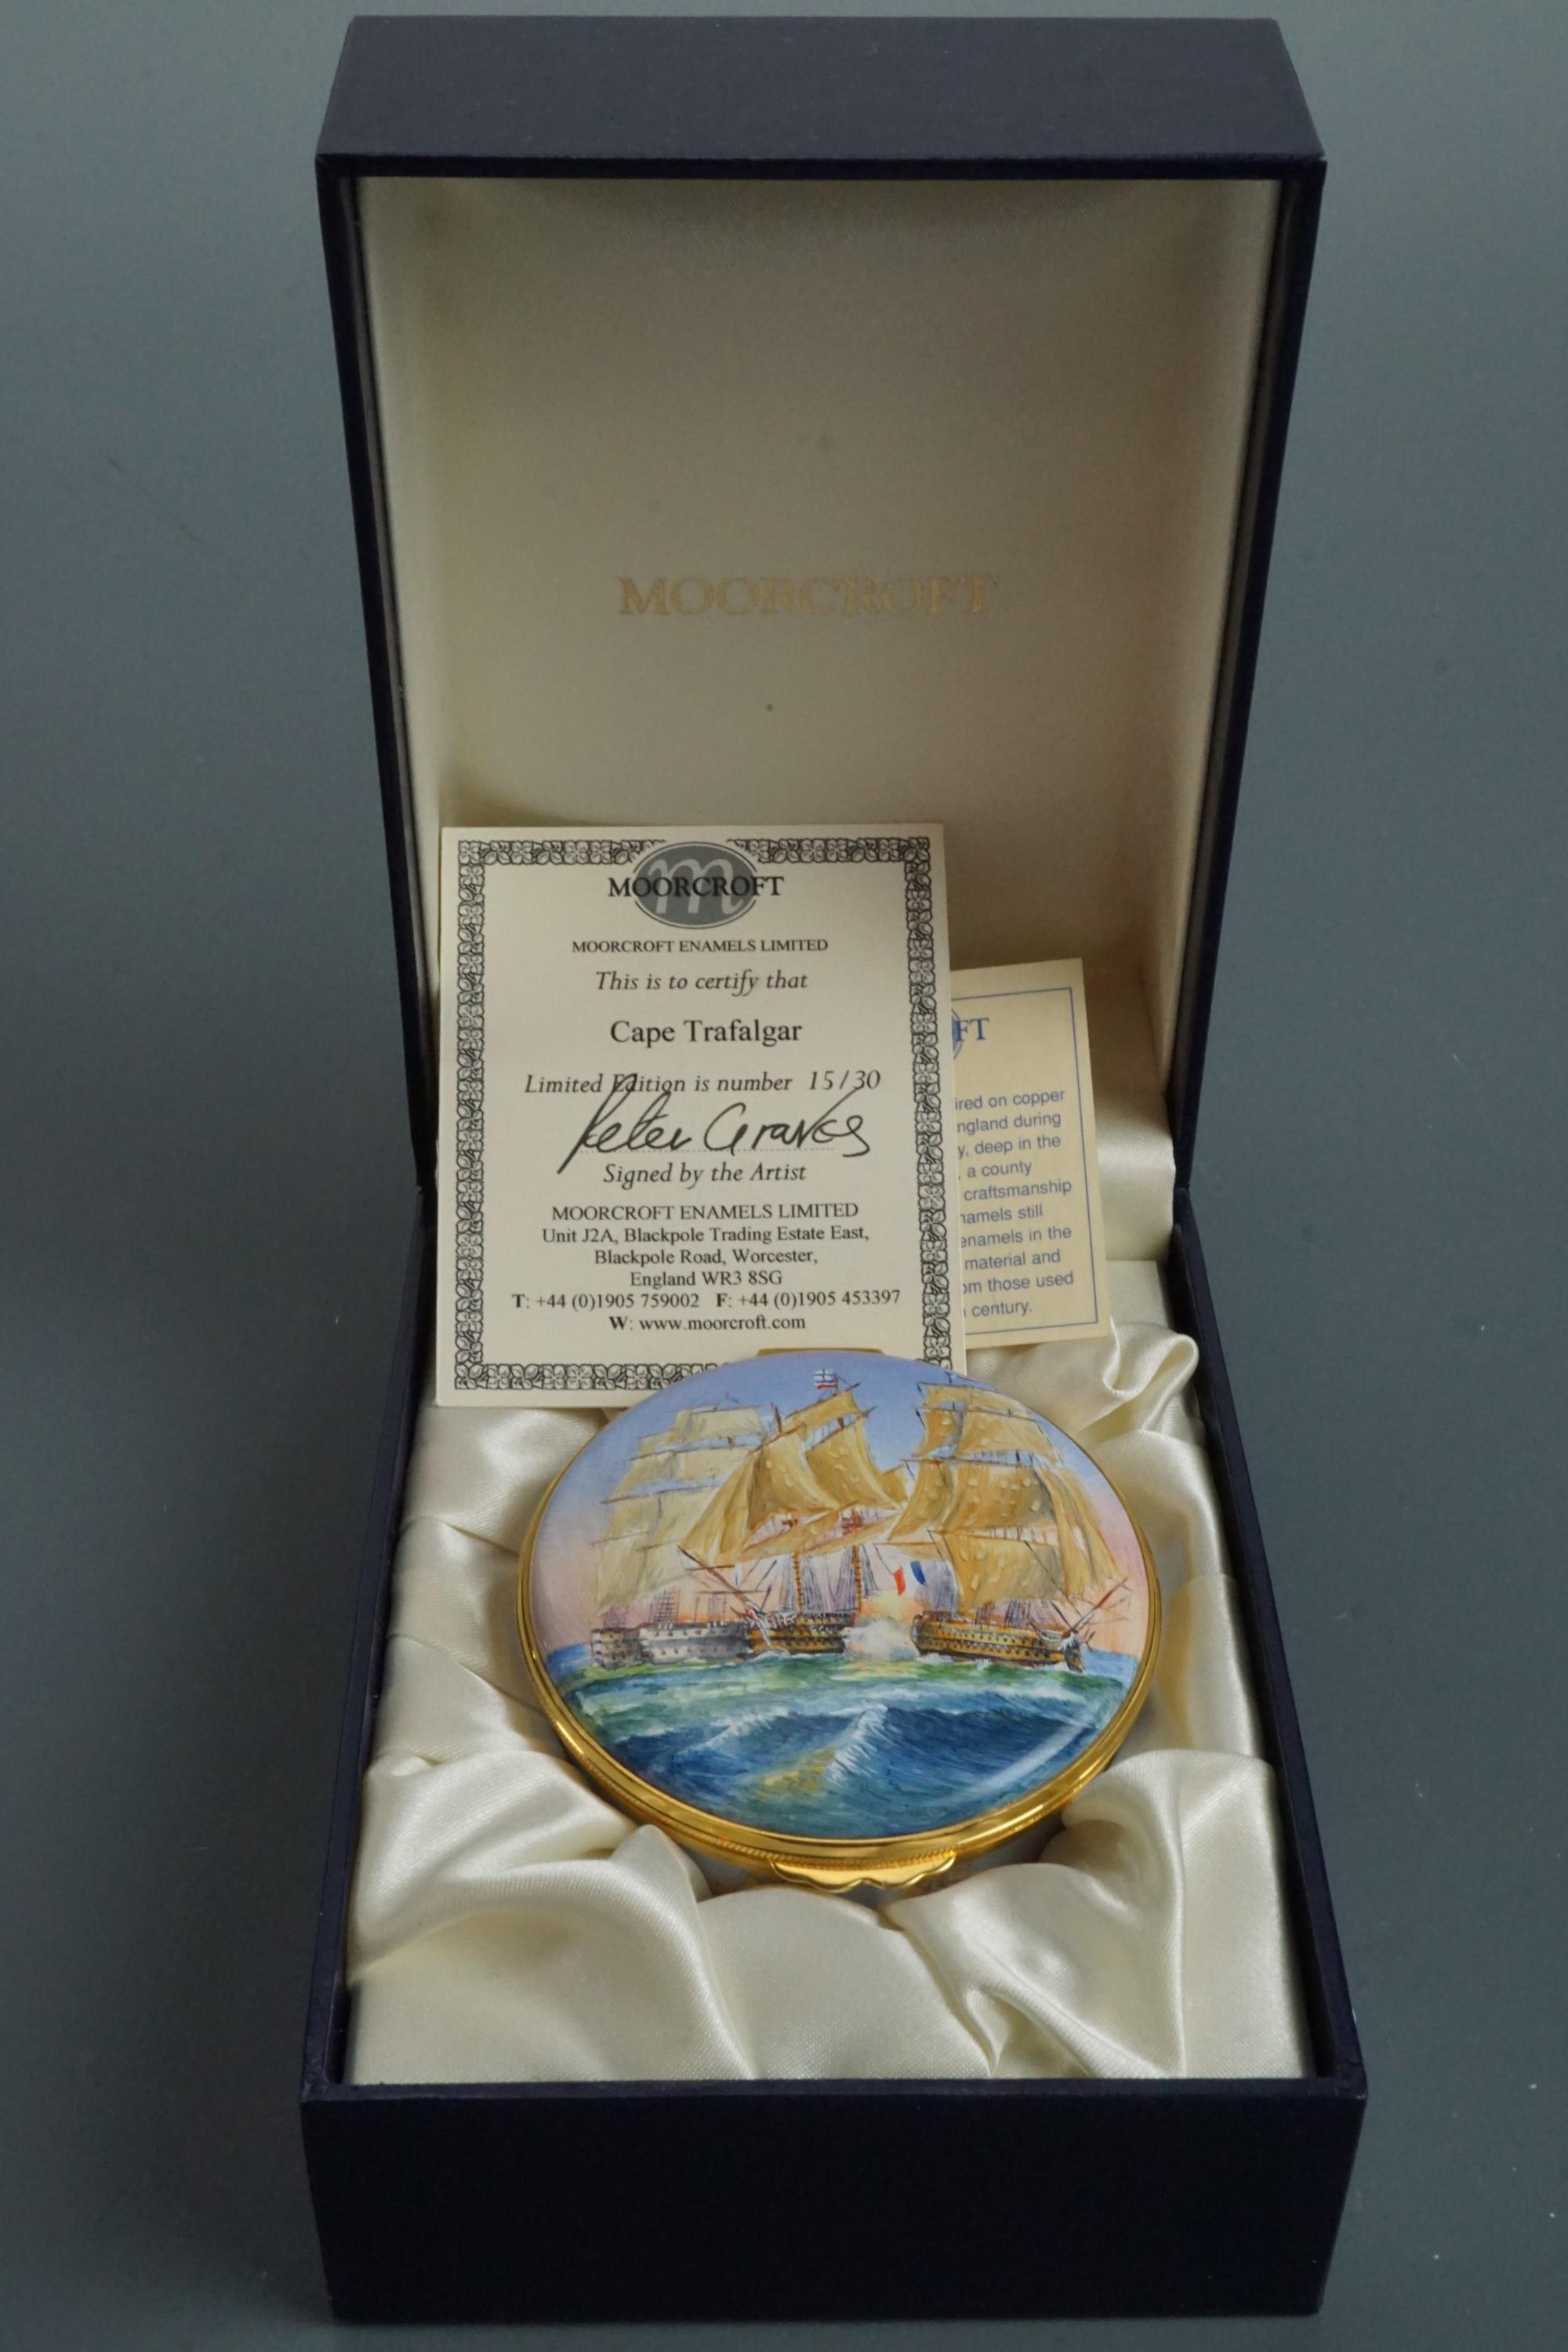 A Moorcroft limited edition enamel box by artist Peter Graves, 15/30, Cape Trafalgar, 4 × 7 cm